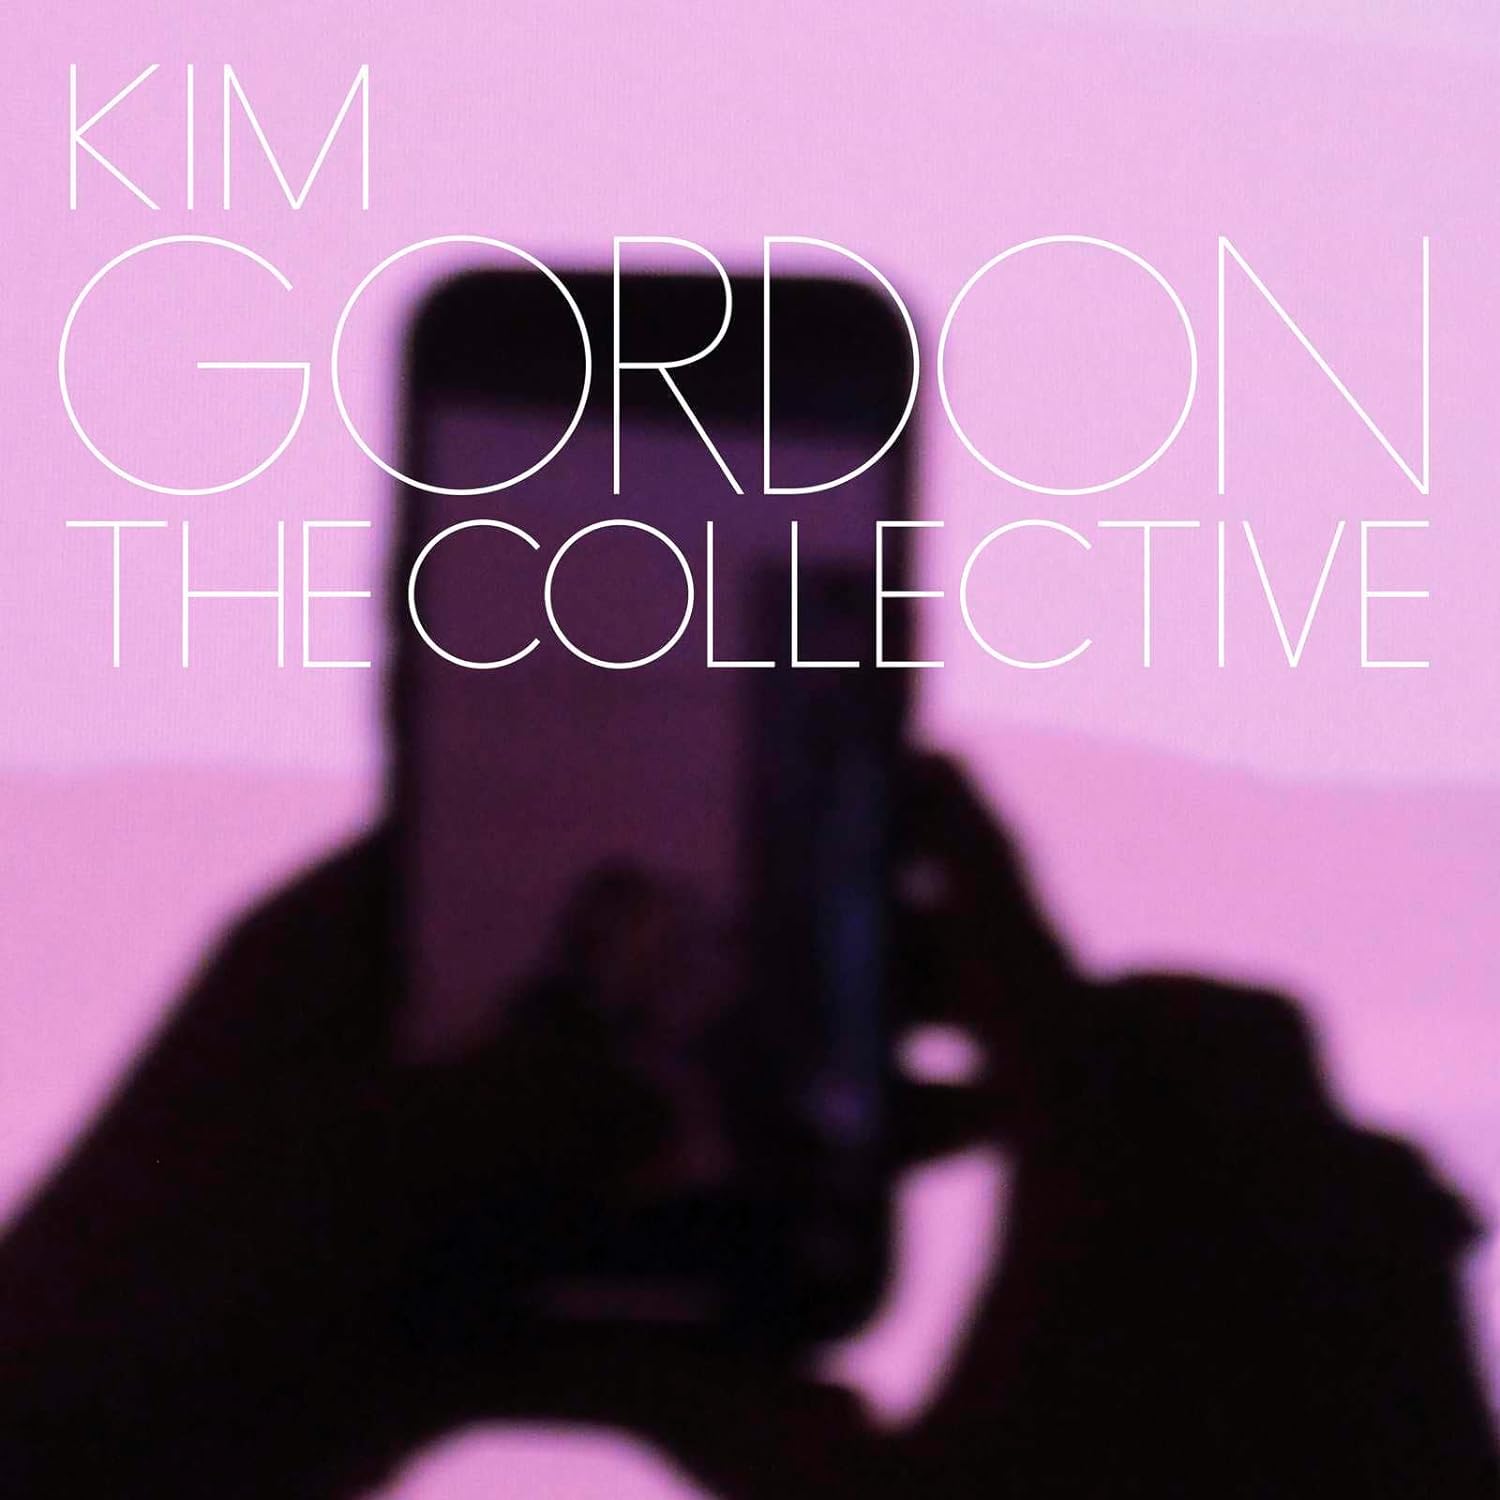 GORDON KIM – COLLECTIVE coke bottle vinyl LP